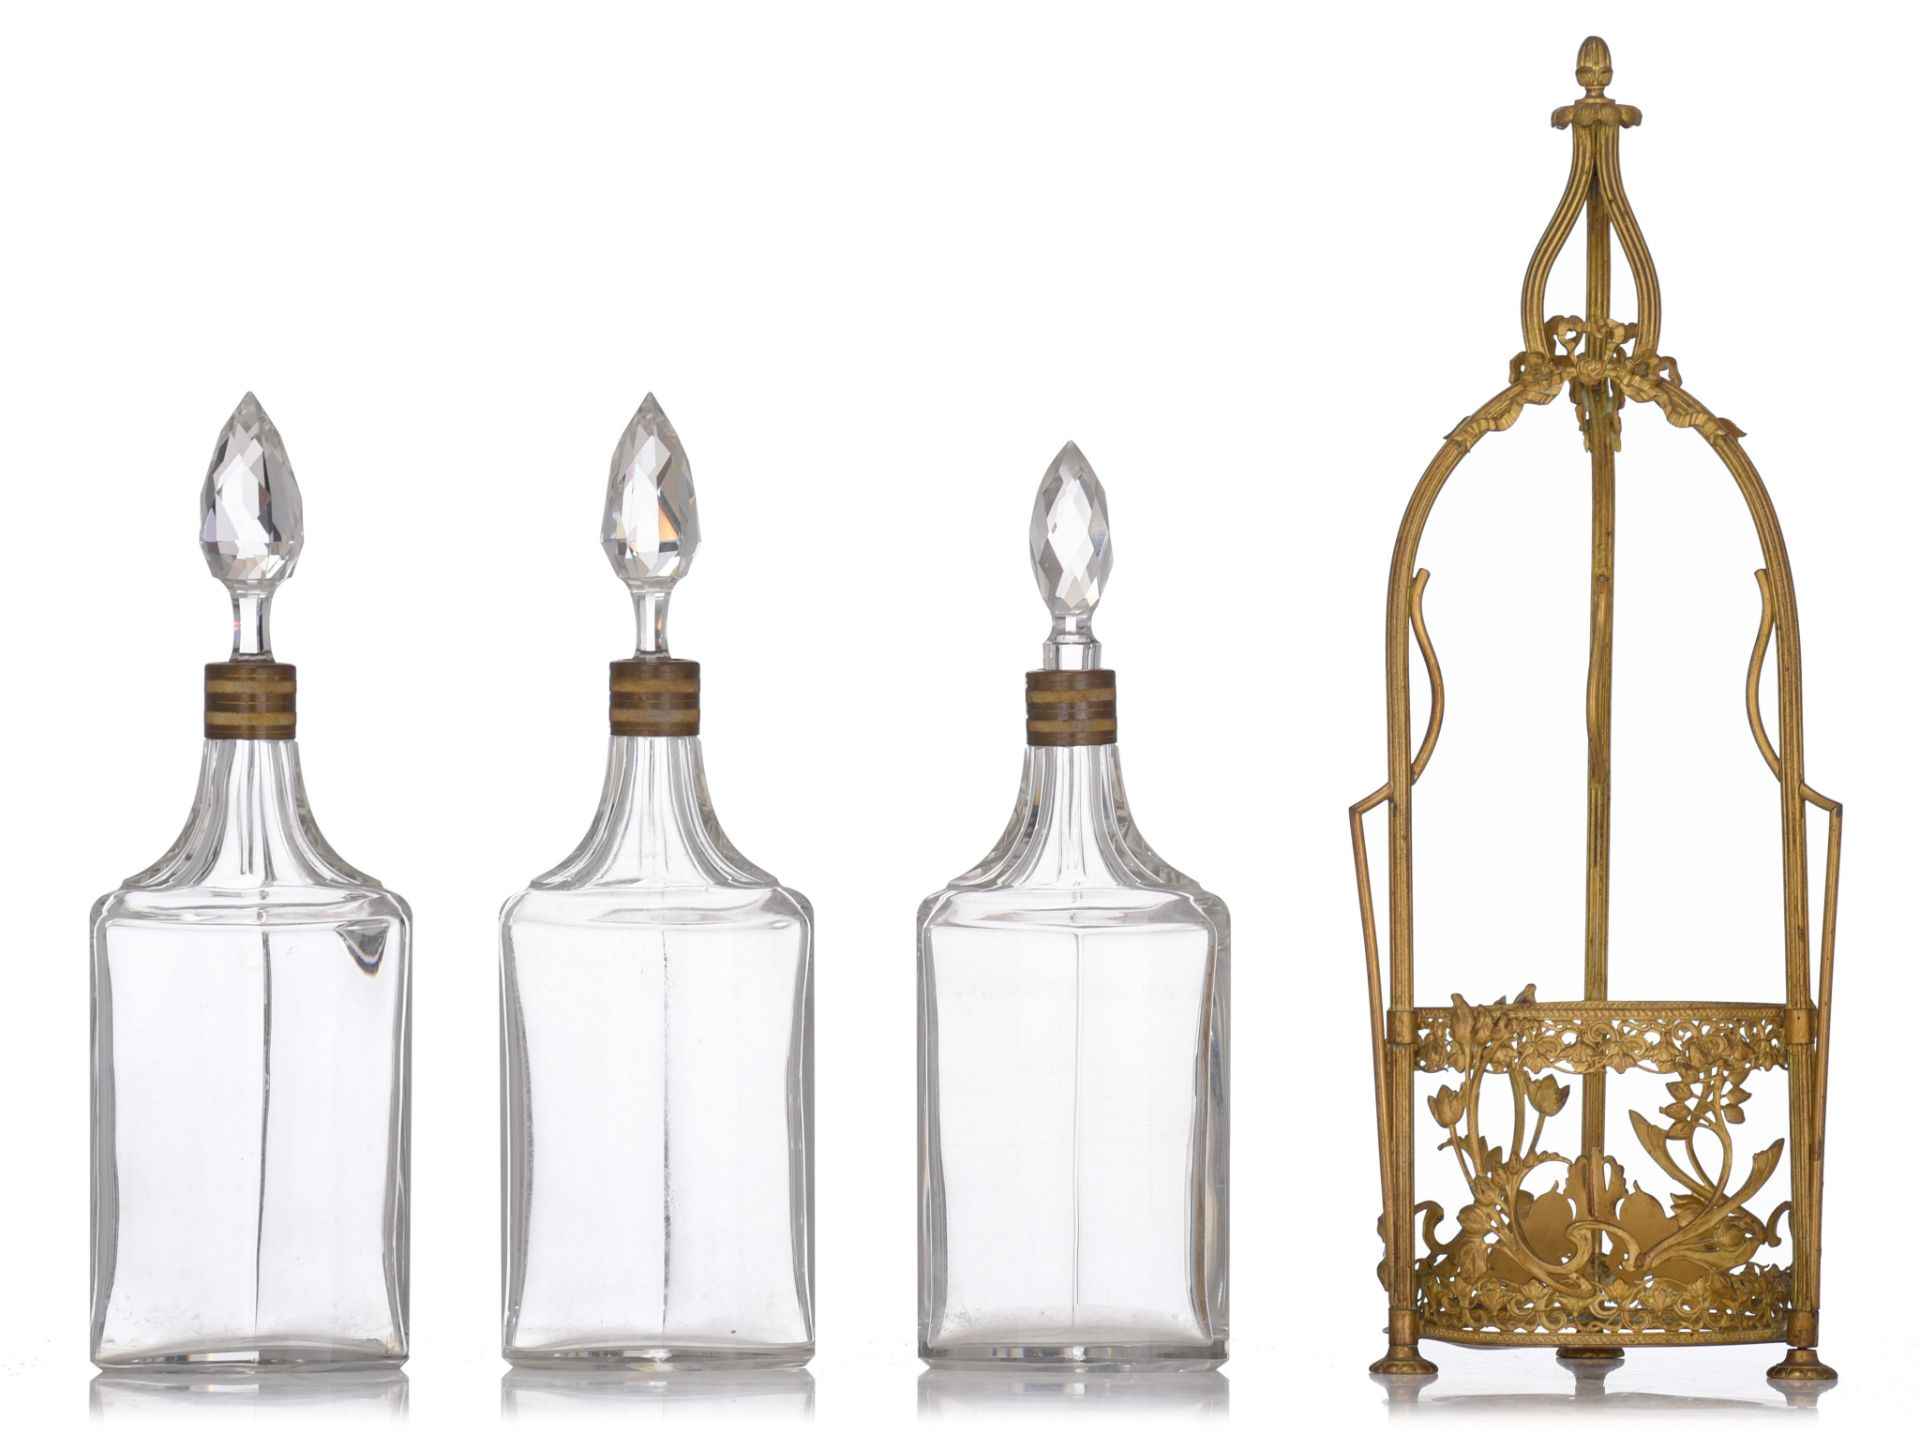 A fine Art Nouveau gilt brass cruet set with three cut glass carafes, H 43,5 cm - Image 5 of 5